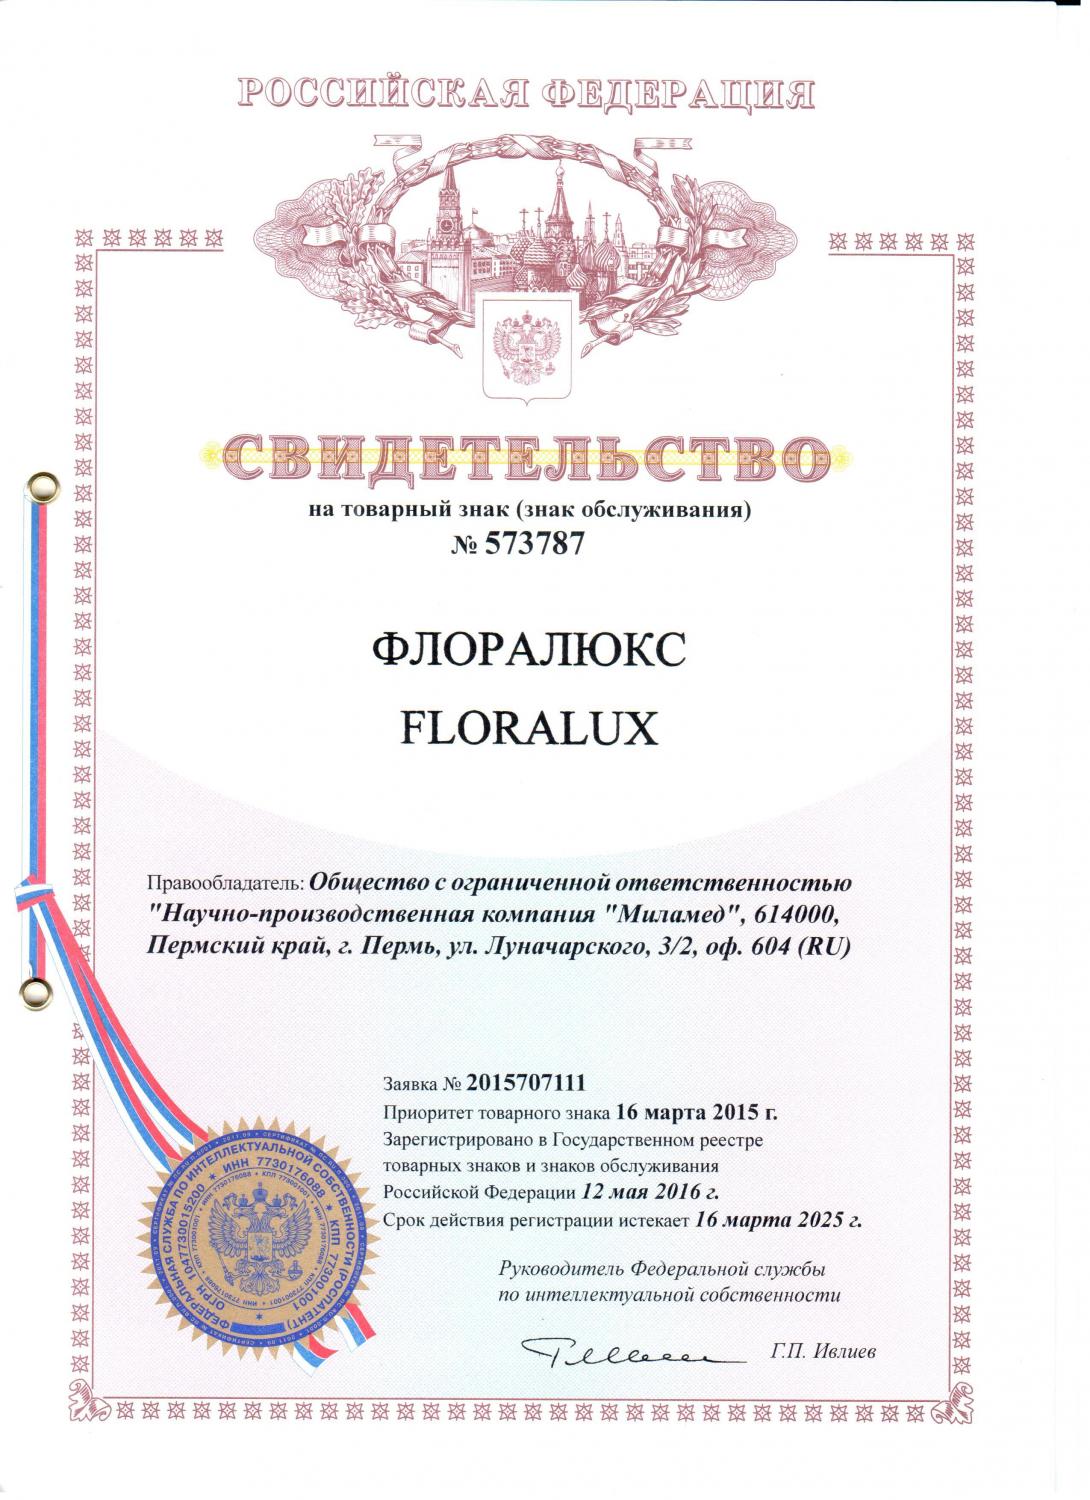 Certificate for Trademark “Floraluks”